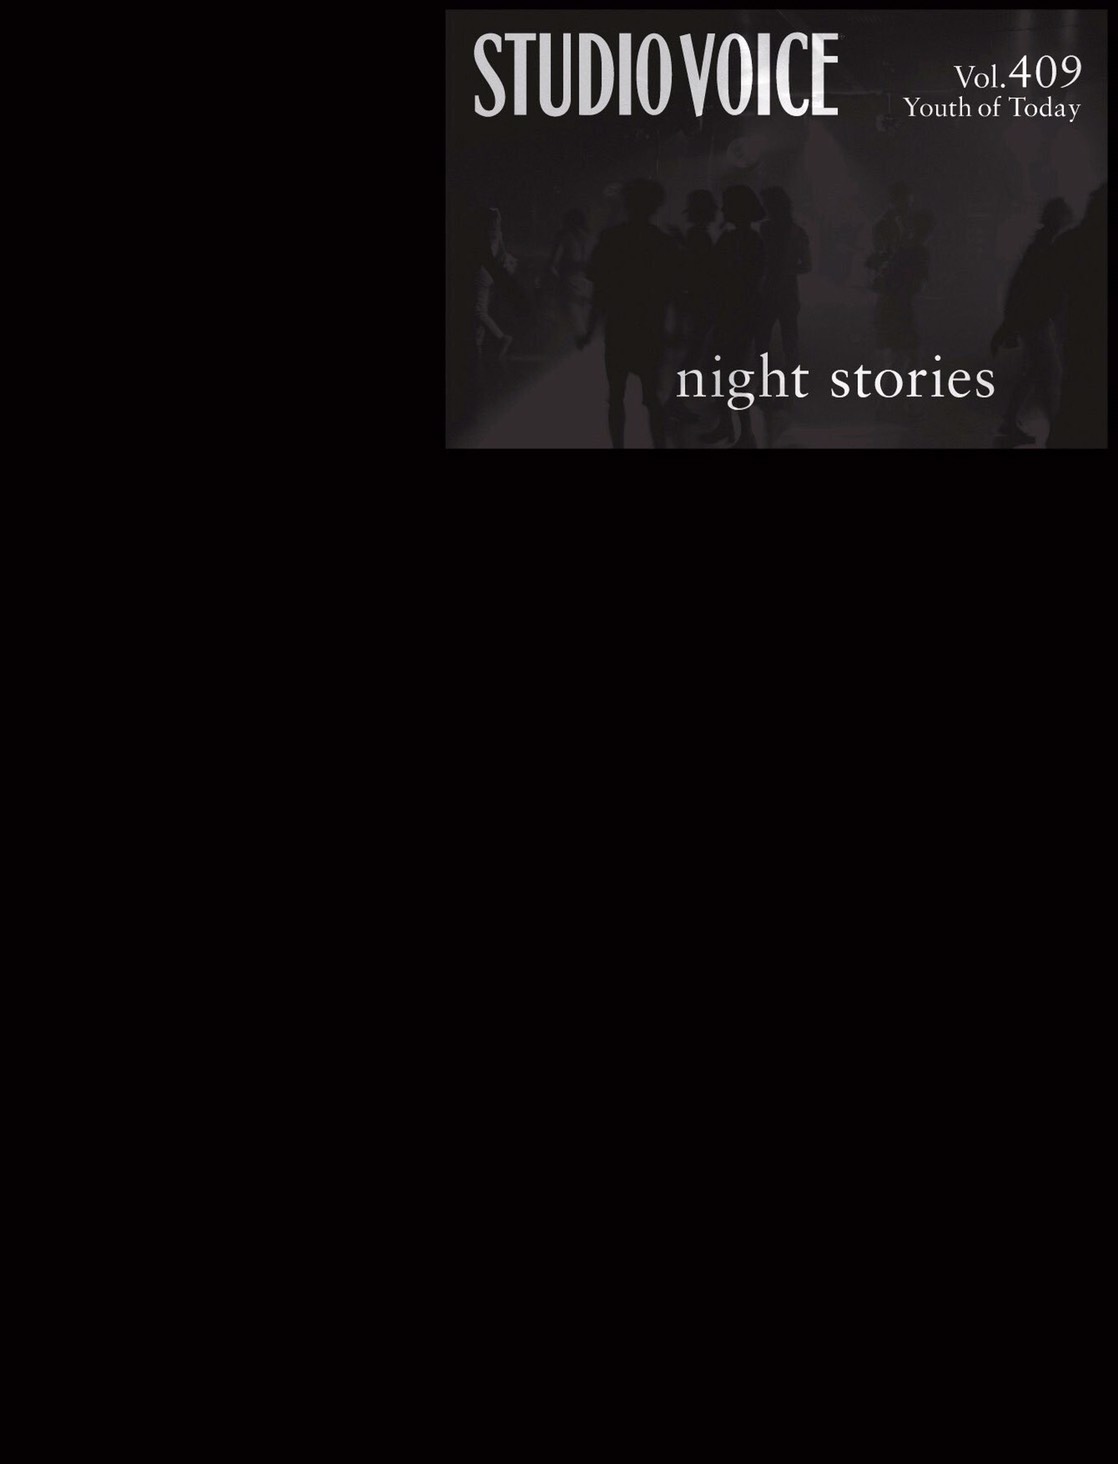 STUDIOVOICE night storiesにマヒトゥ・ザ・ピーポーの企画が掲載されました。